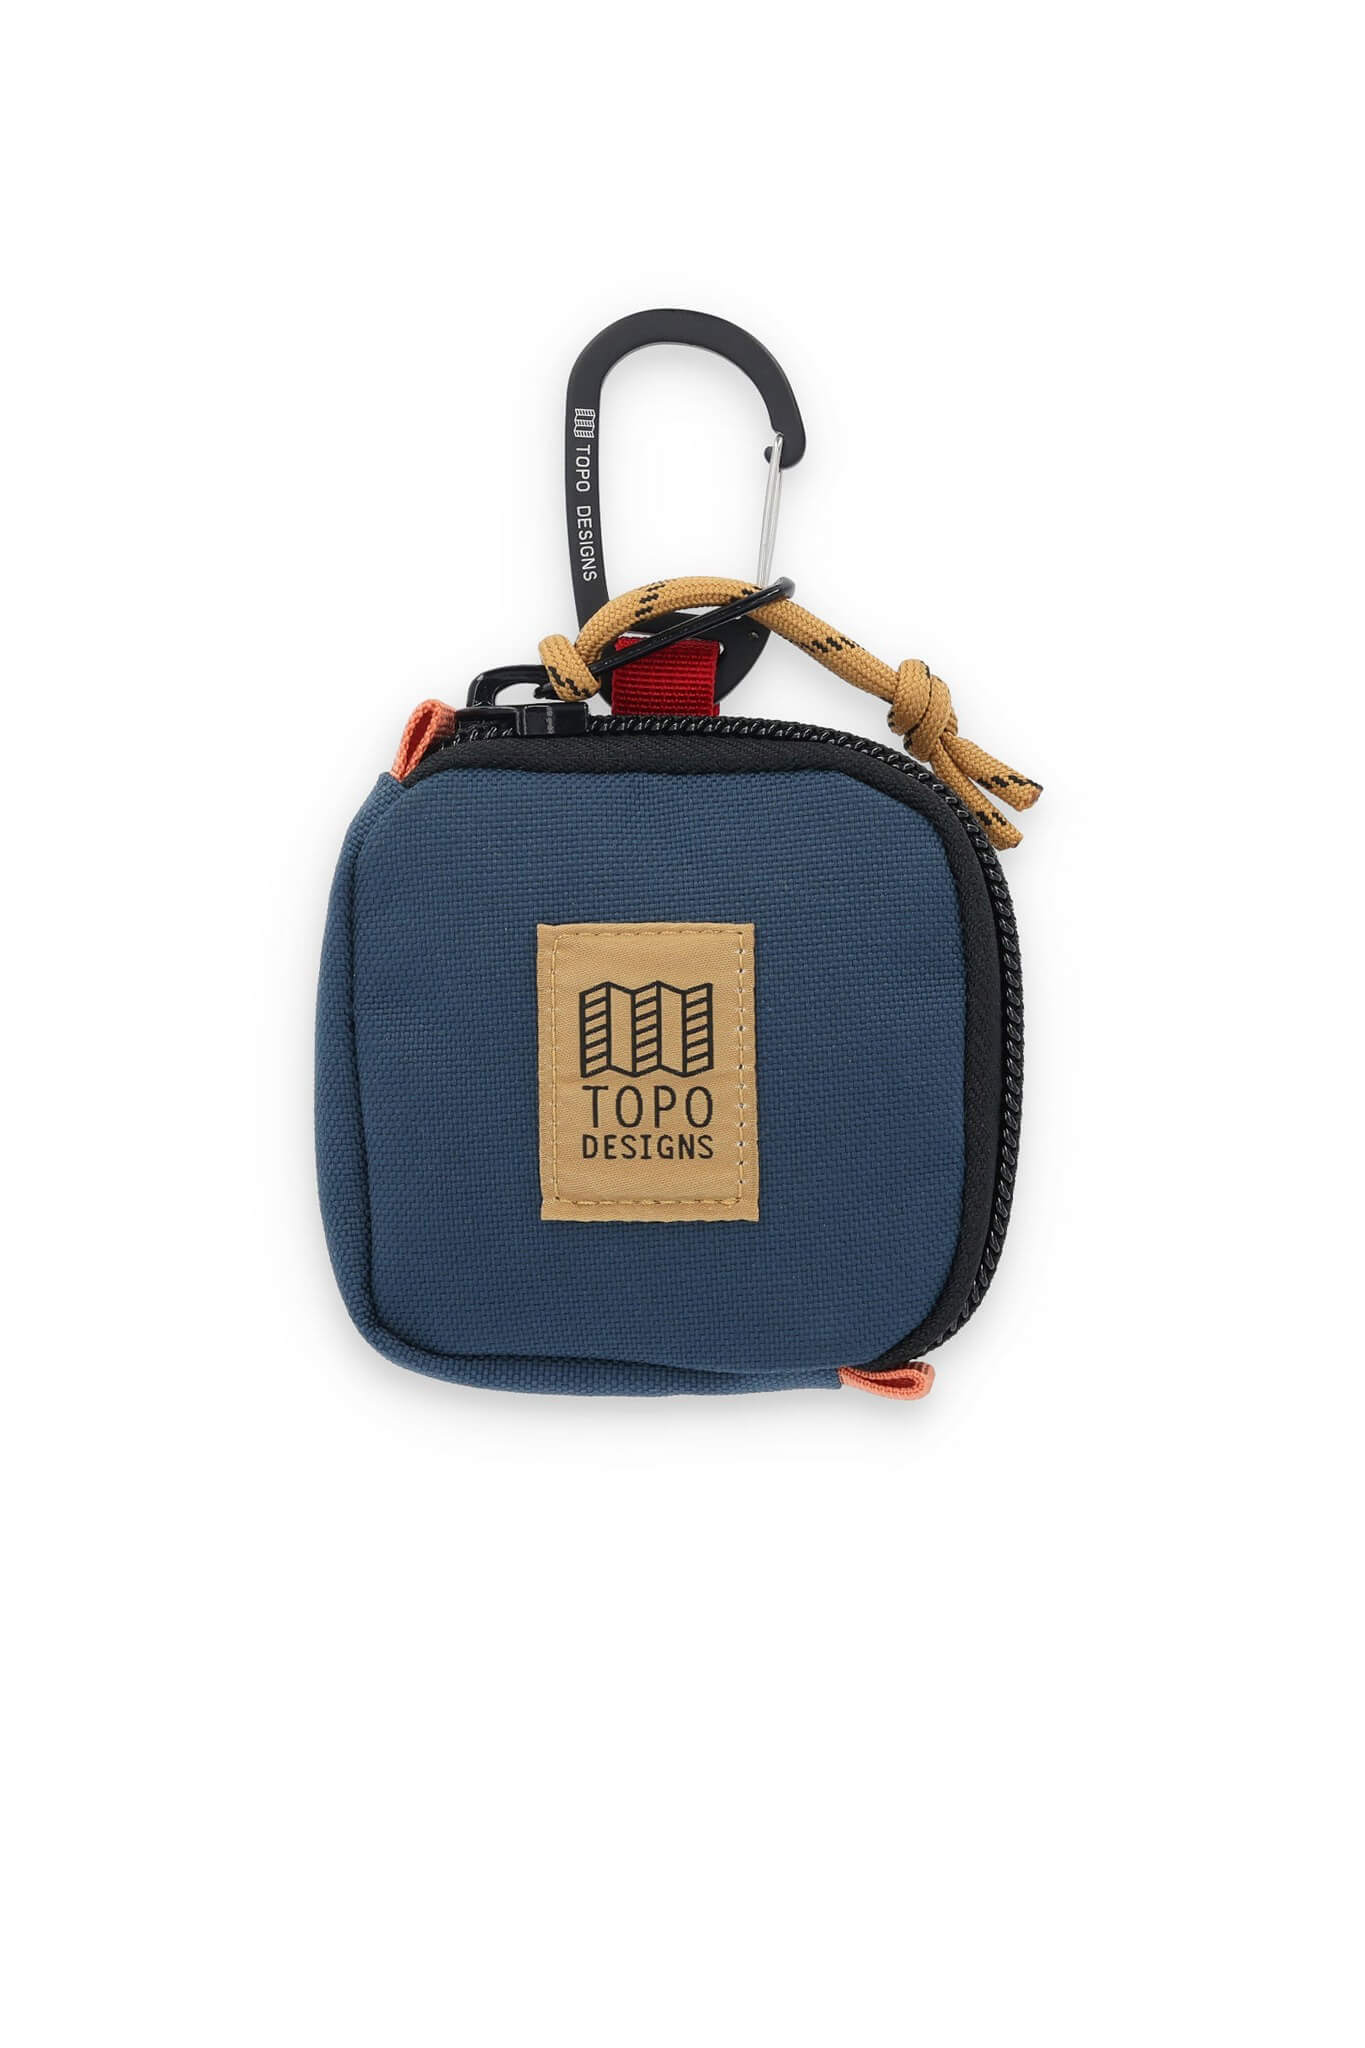 Topo Designs square bag in pond blue